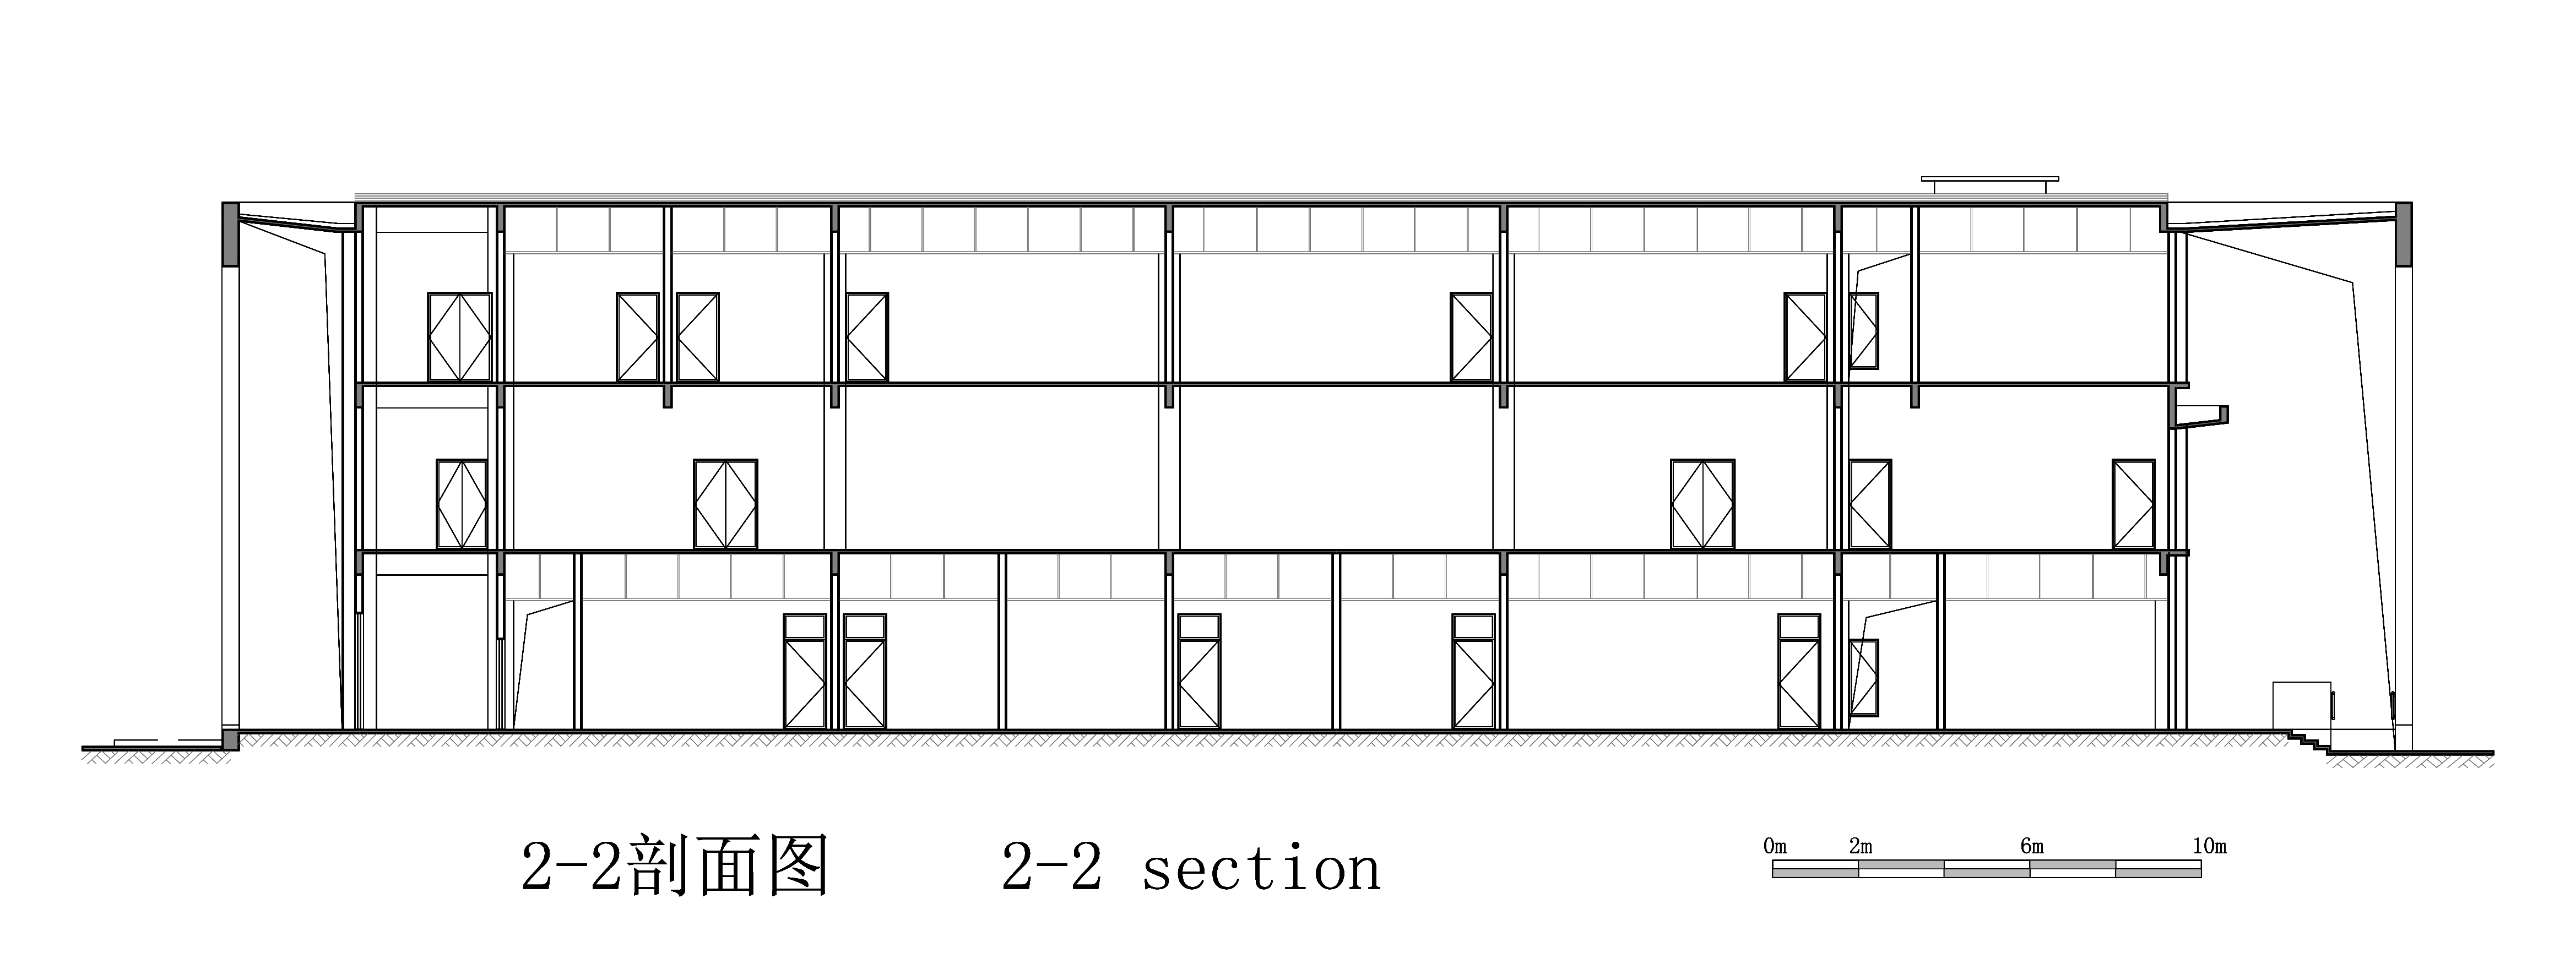 m92、2-2剖面图.jpg